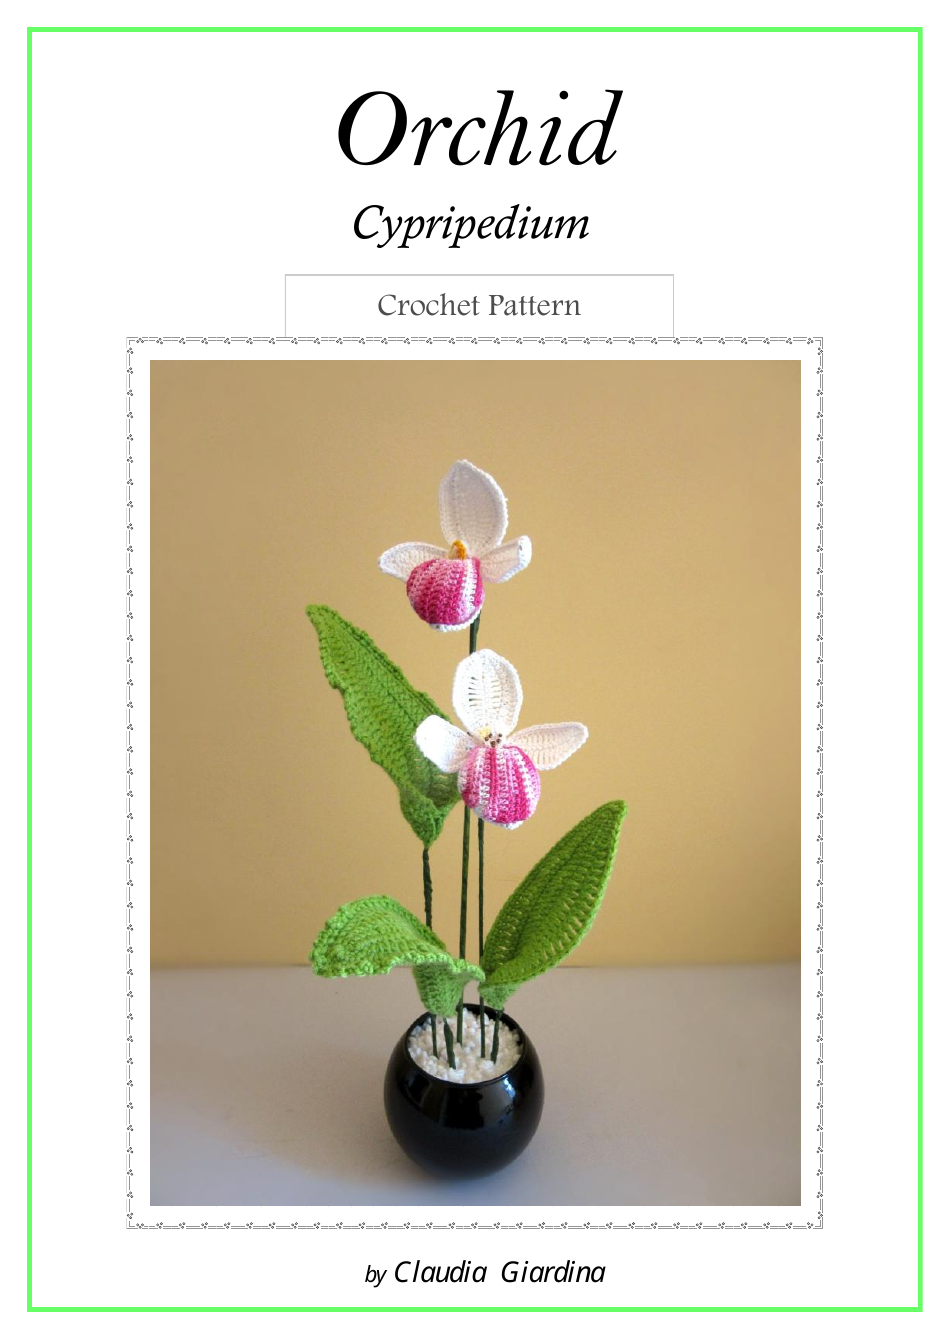 Orchid Cypripedium Crochet Pattern - Document Image